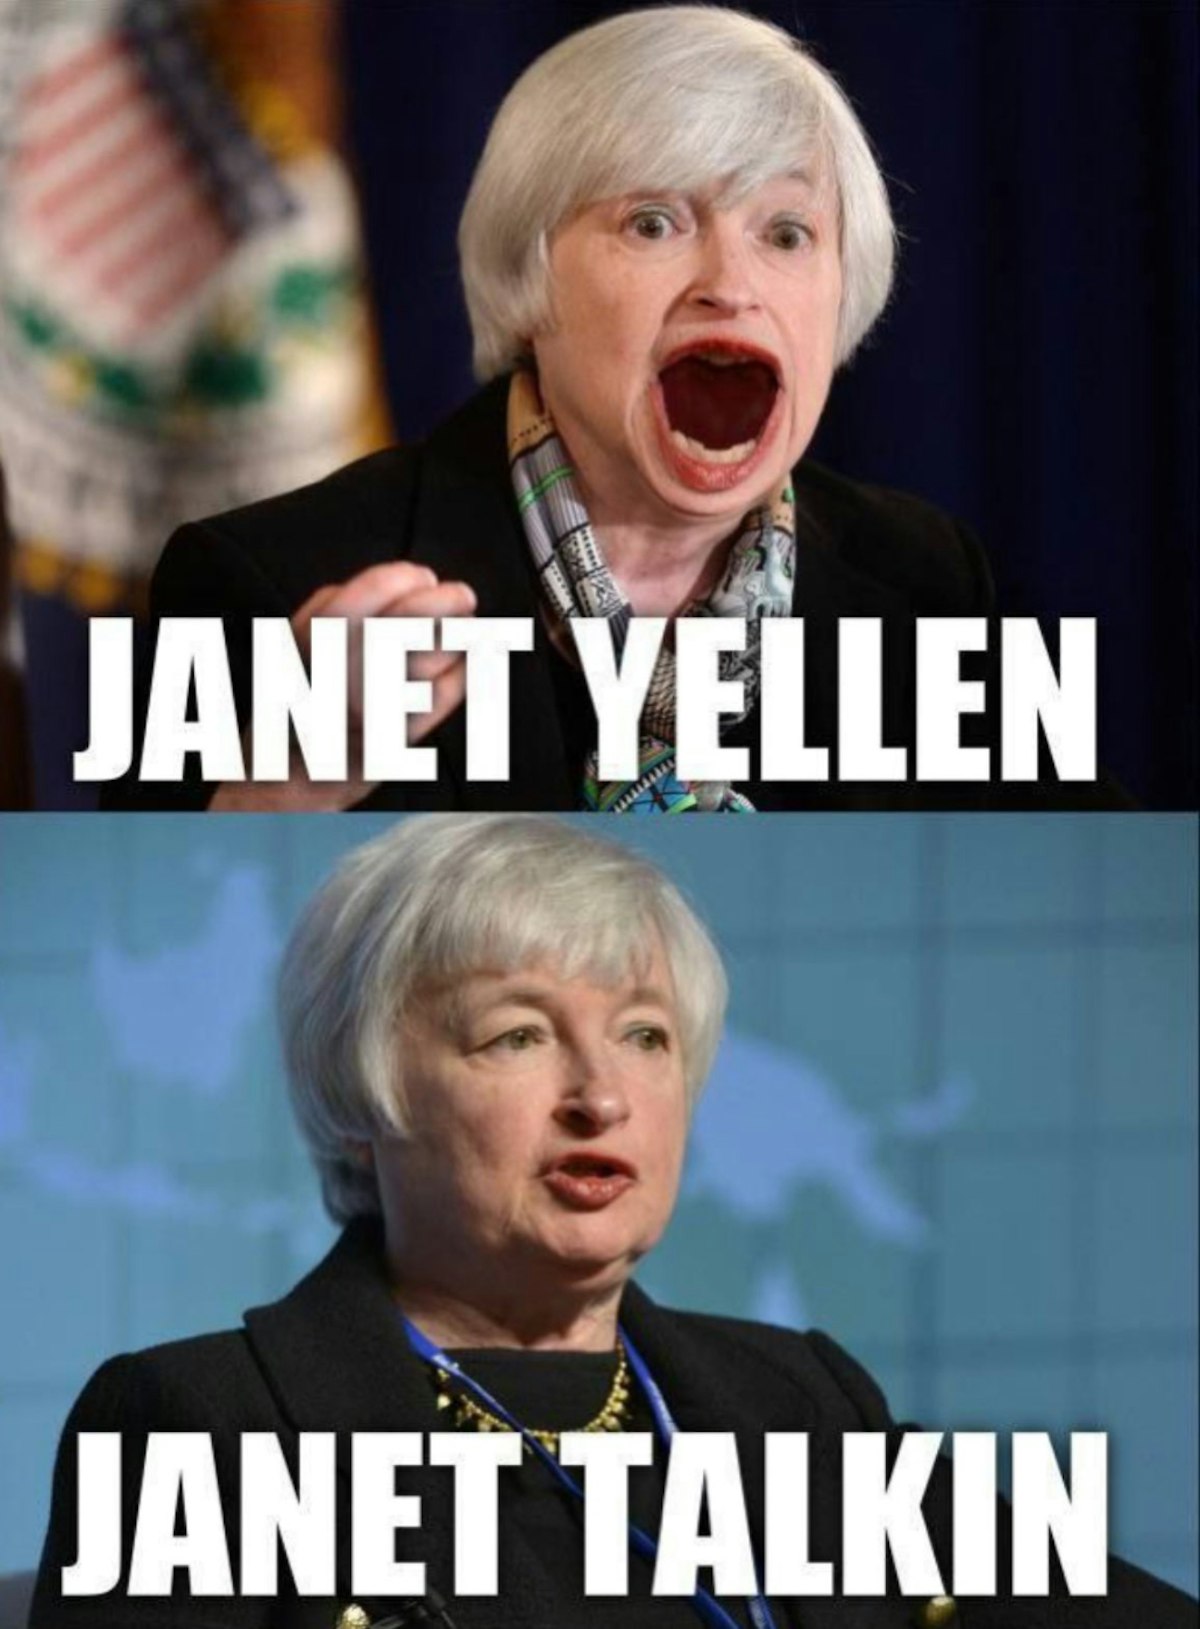 featured image - Yellen or Talkin'?